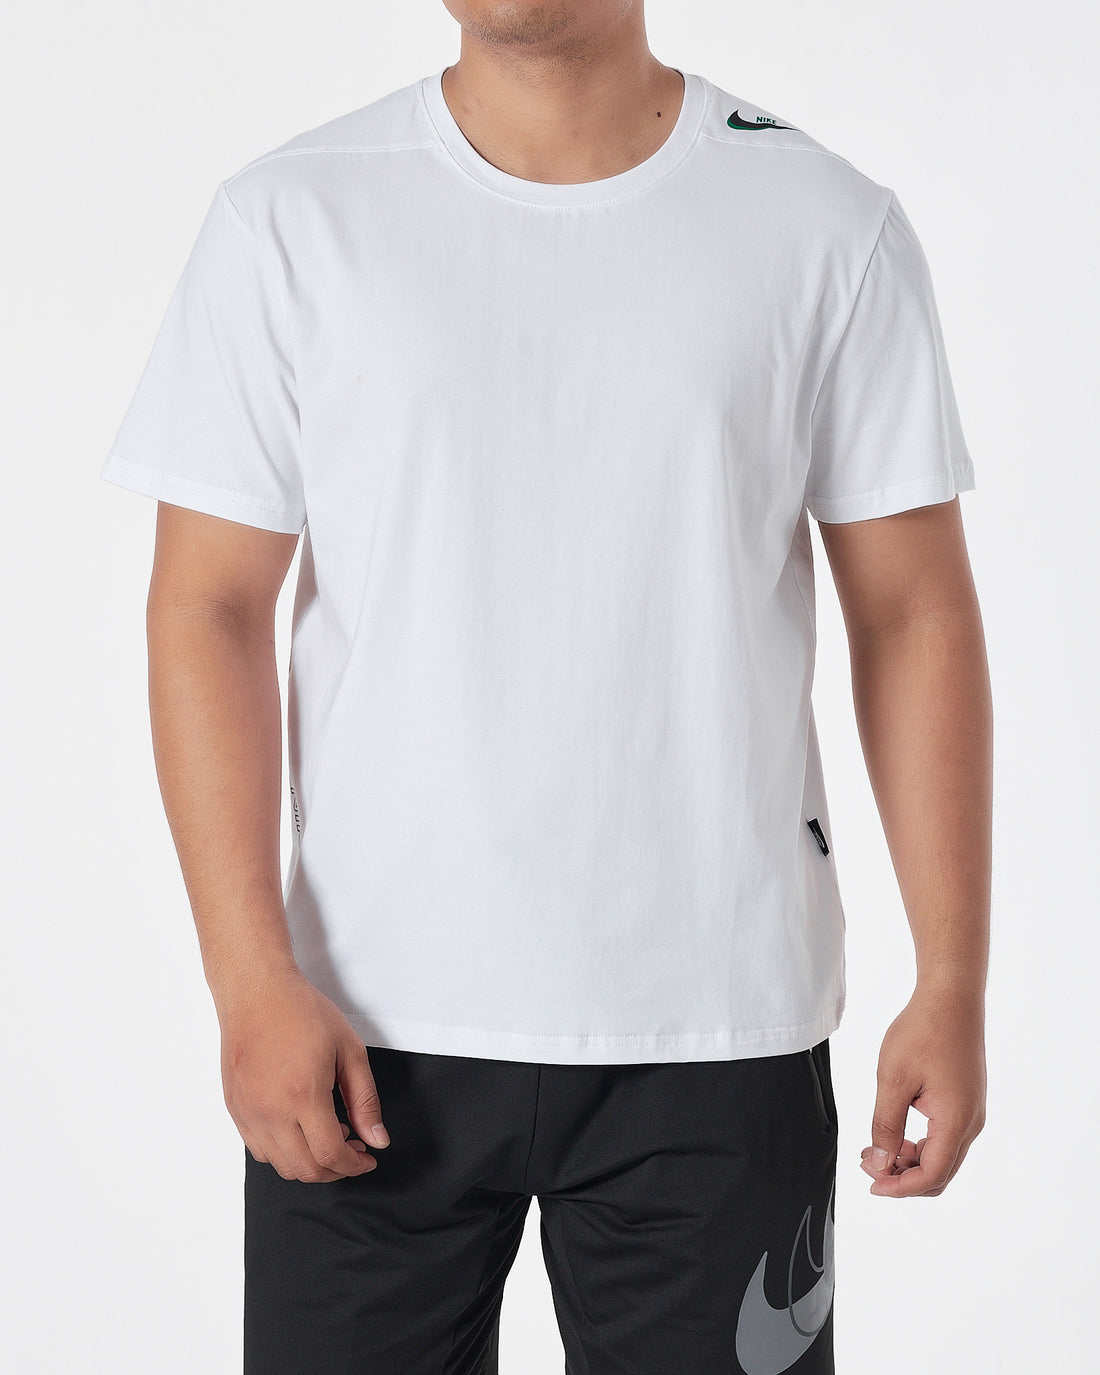 NIK Swooh  Shoulder Printed Men White T-Shirt 13.50